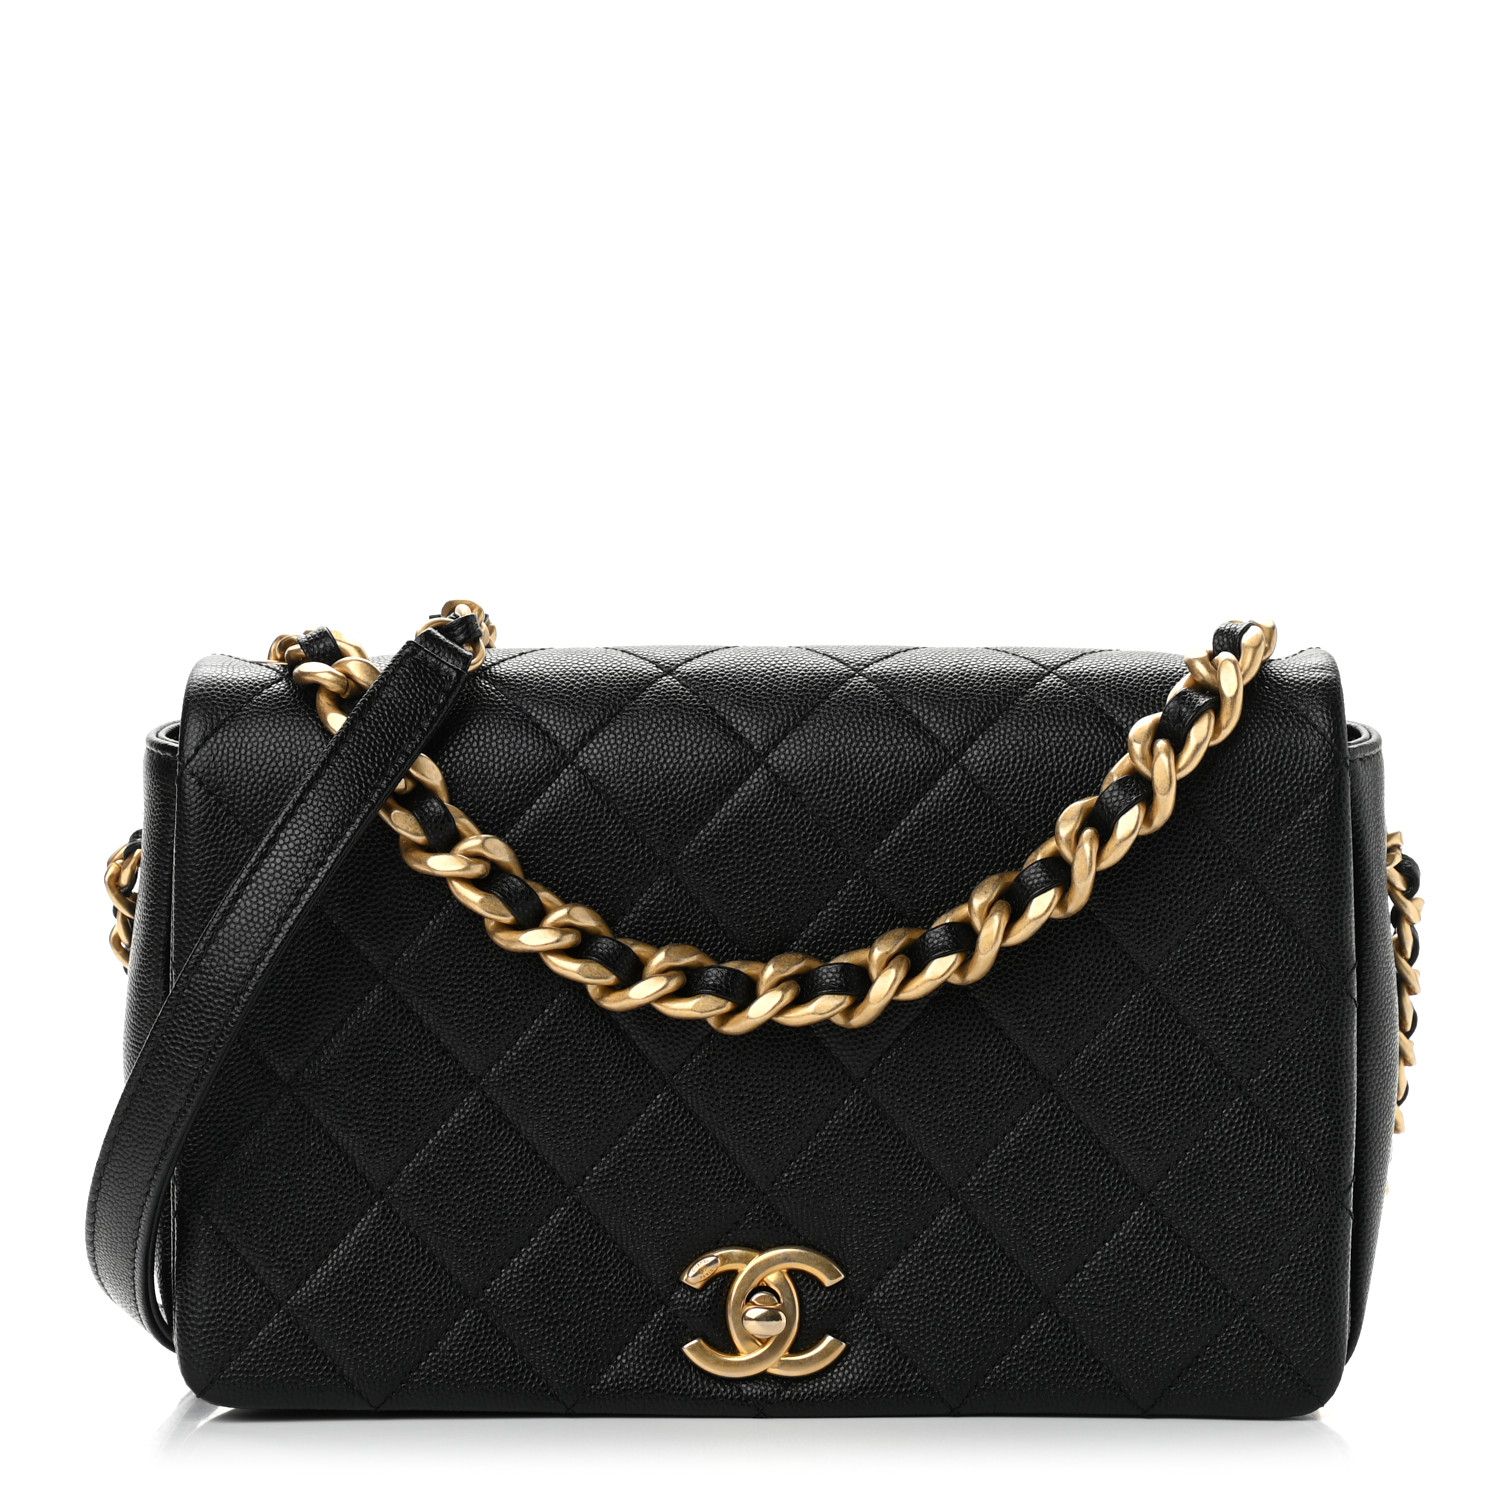 CHANEL

Caviar Quilted Medium Fashion Therapy Flap Bag Black | Fashionphile